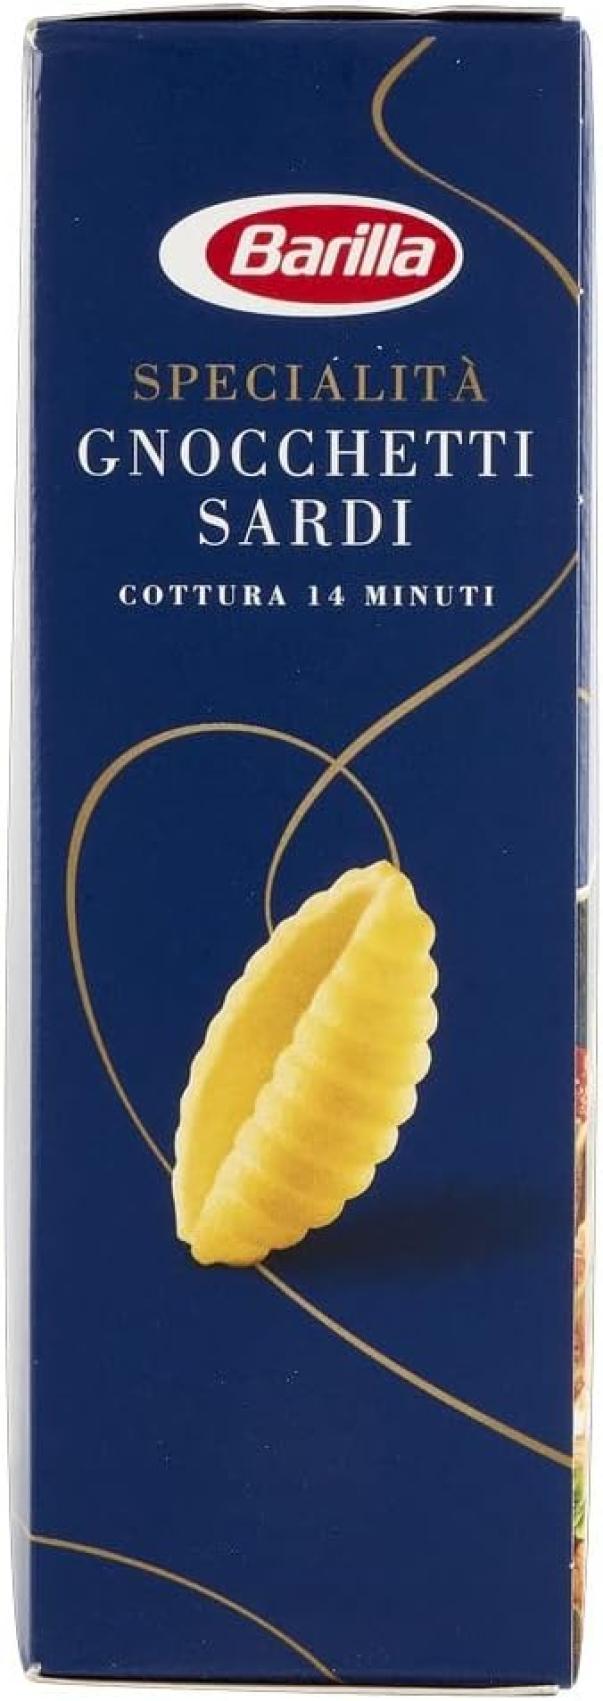 pasta-fresca-gnocchetti-sardi-barilla-500gr-4